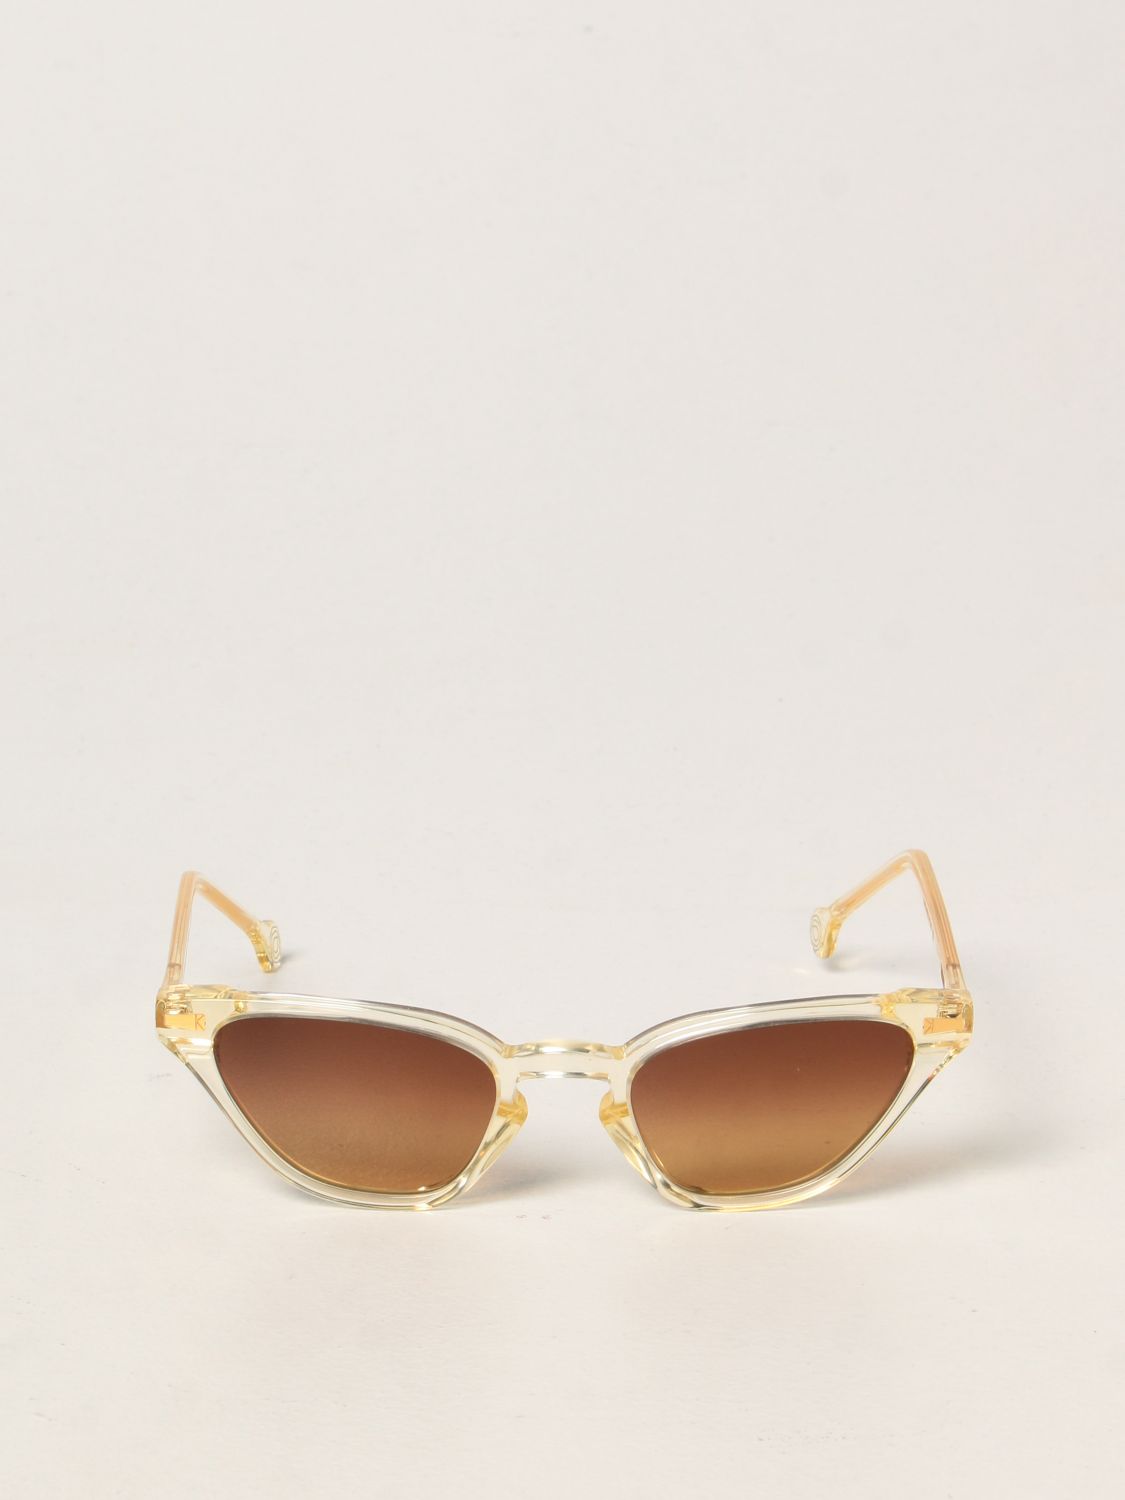 Glasses Kyme: Alessandra Kyme sunglasses yellow 2